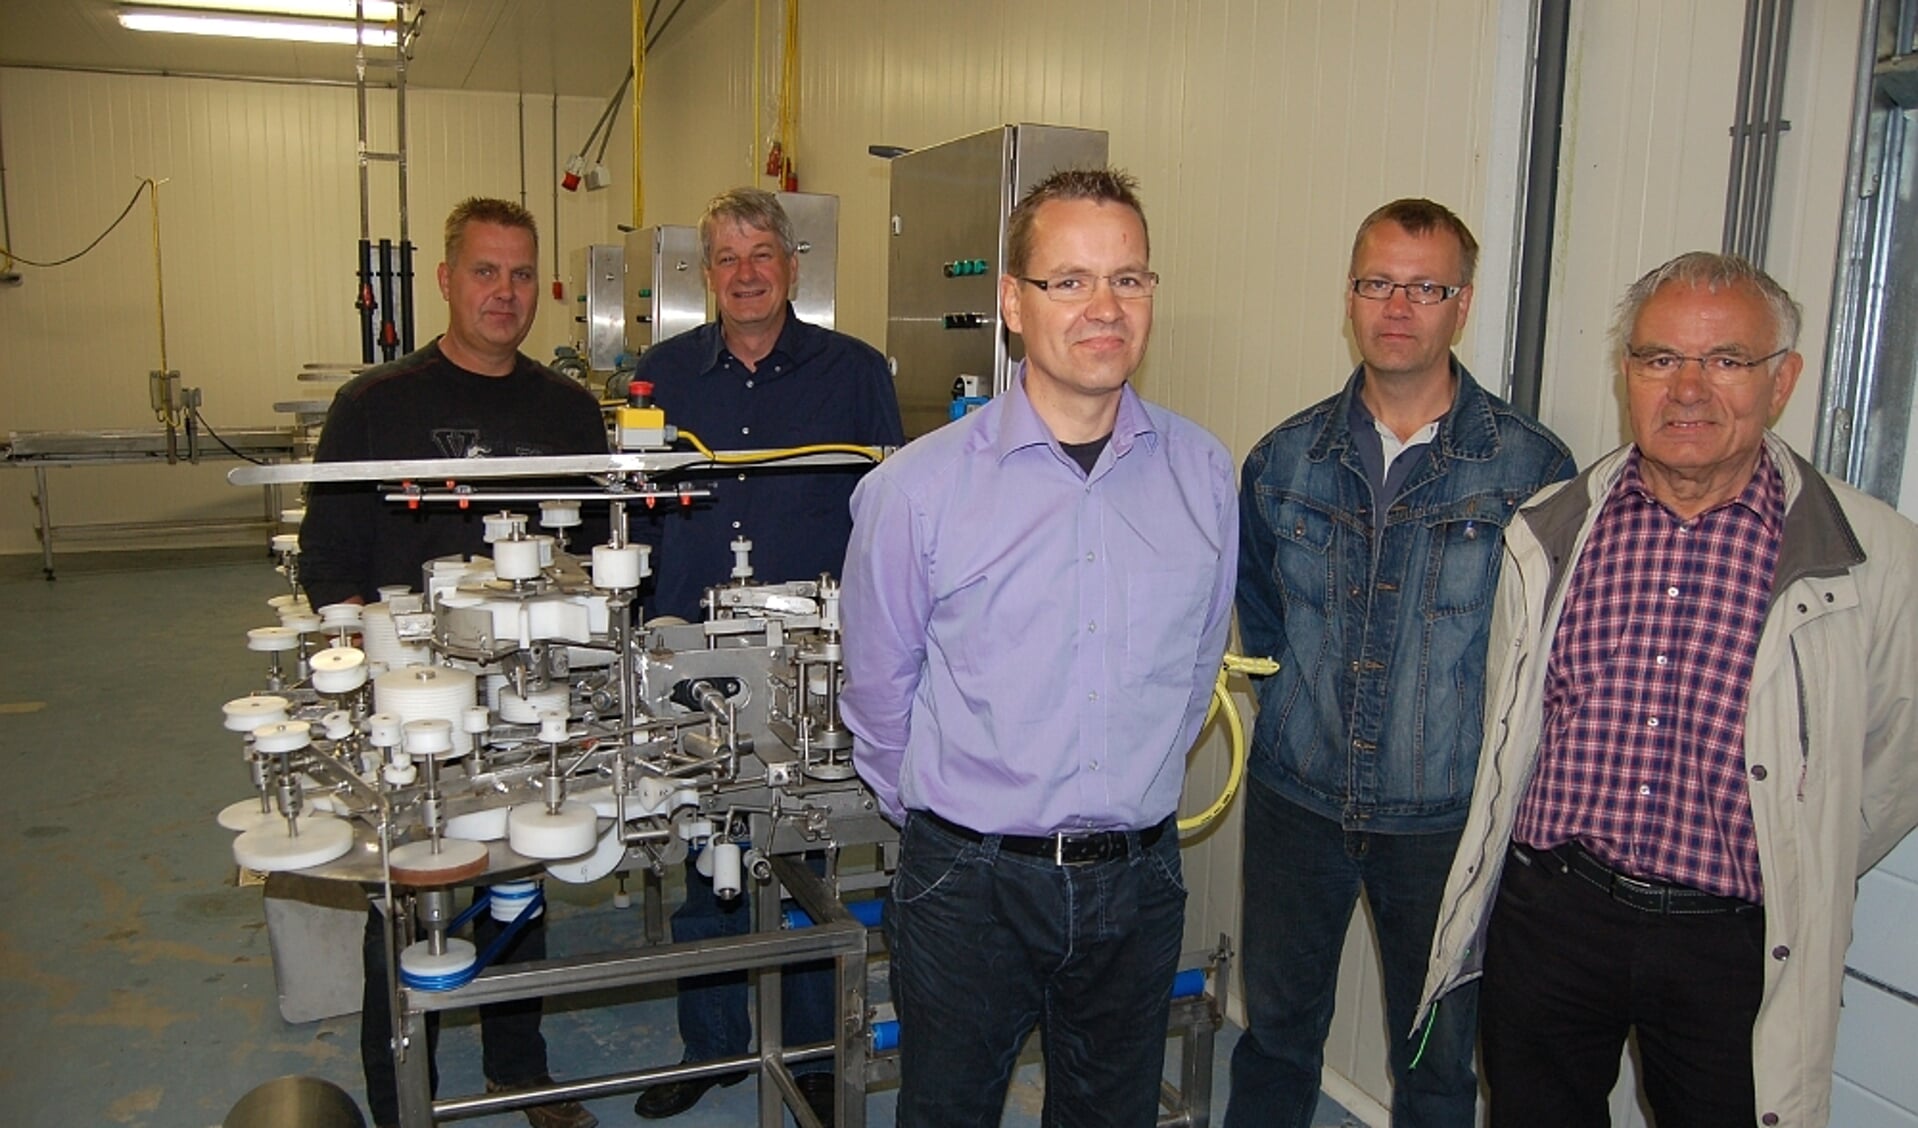  Op de foto van links naar rechts: Klaas Kant, Rob Pikkert, Alfred Kant, Richard Kant en vader Appie Kant.